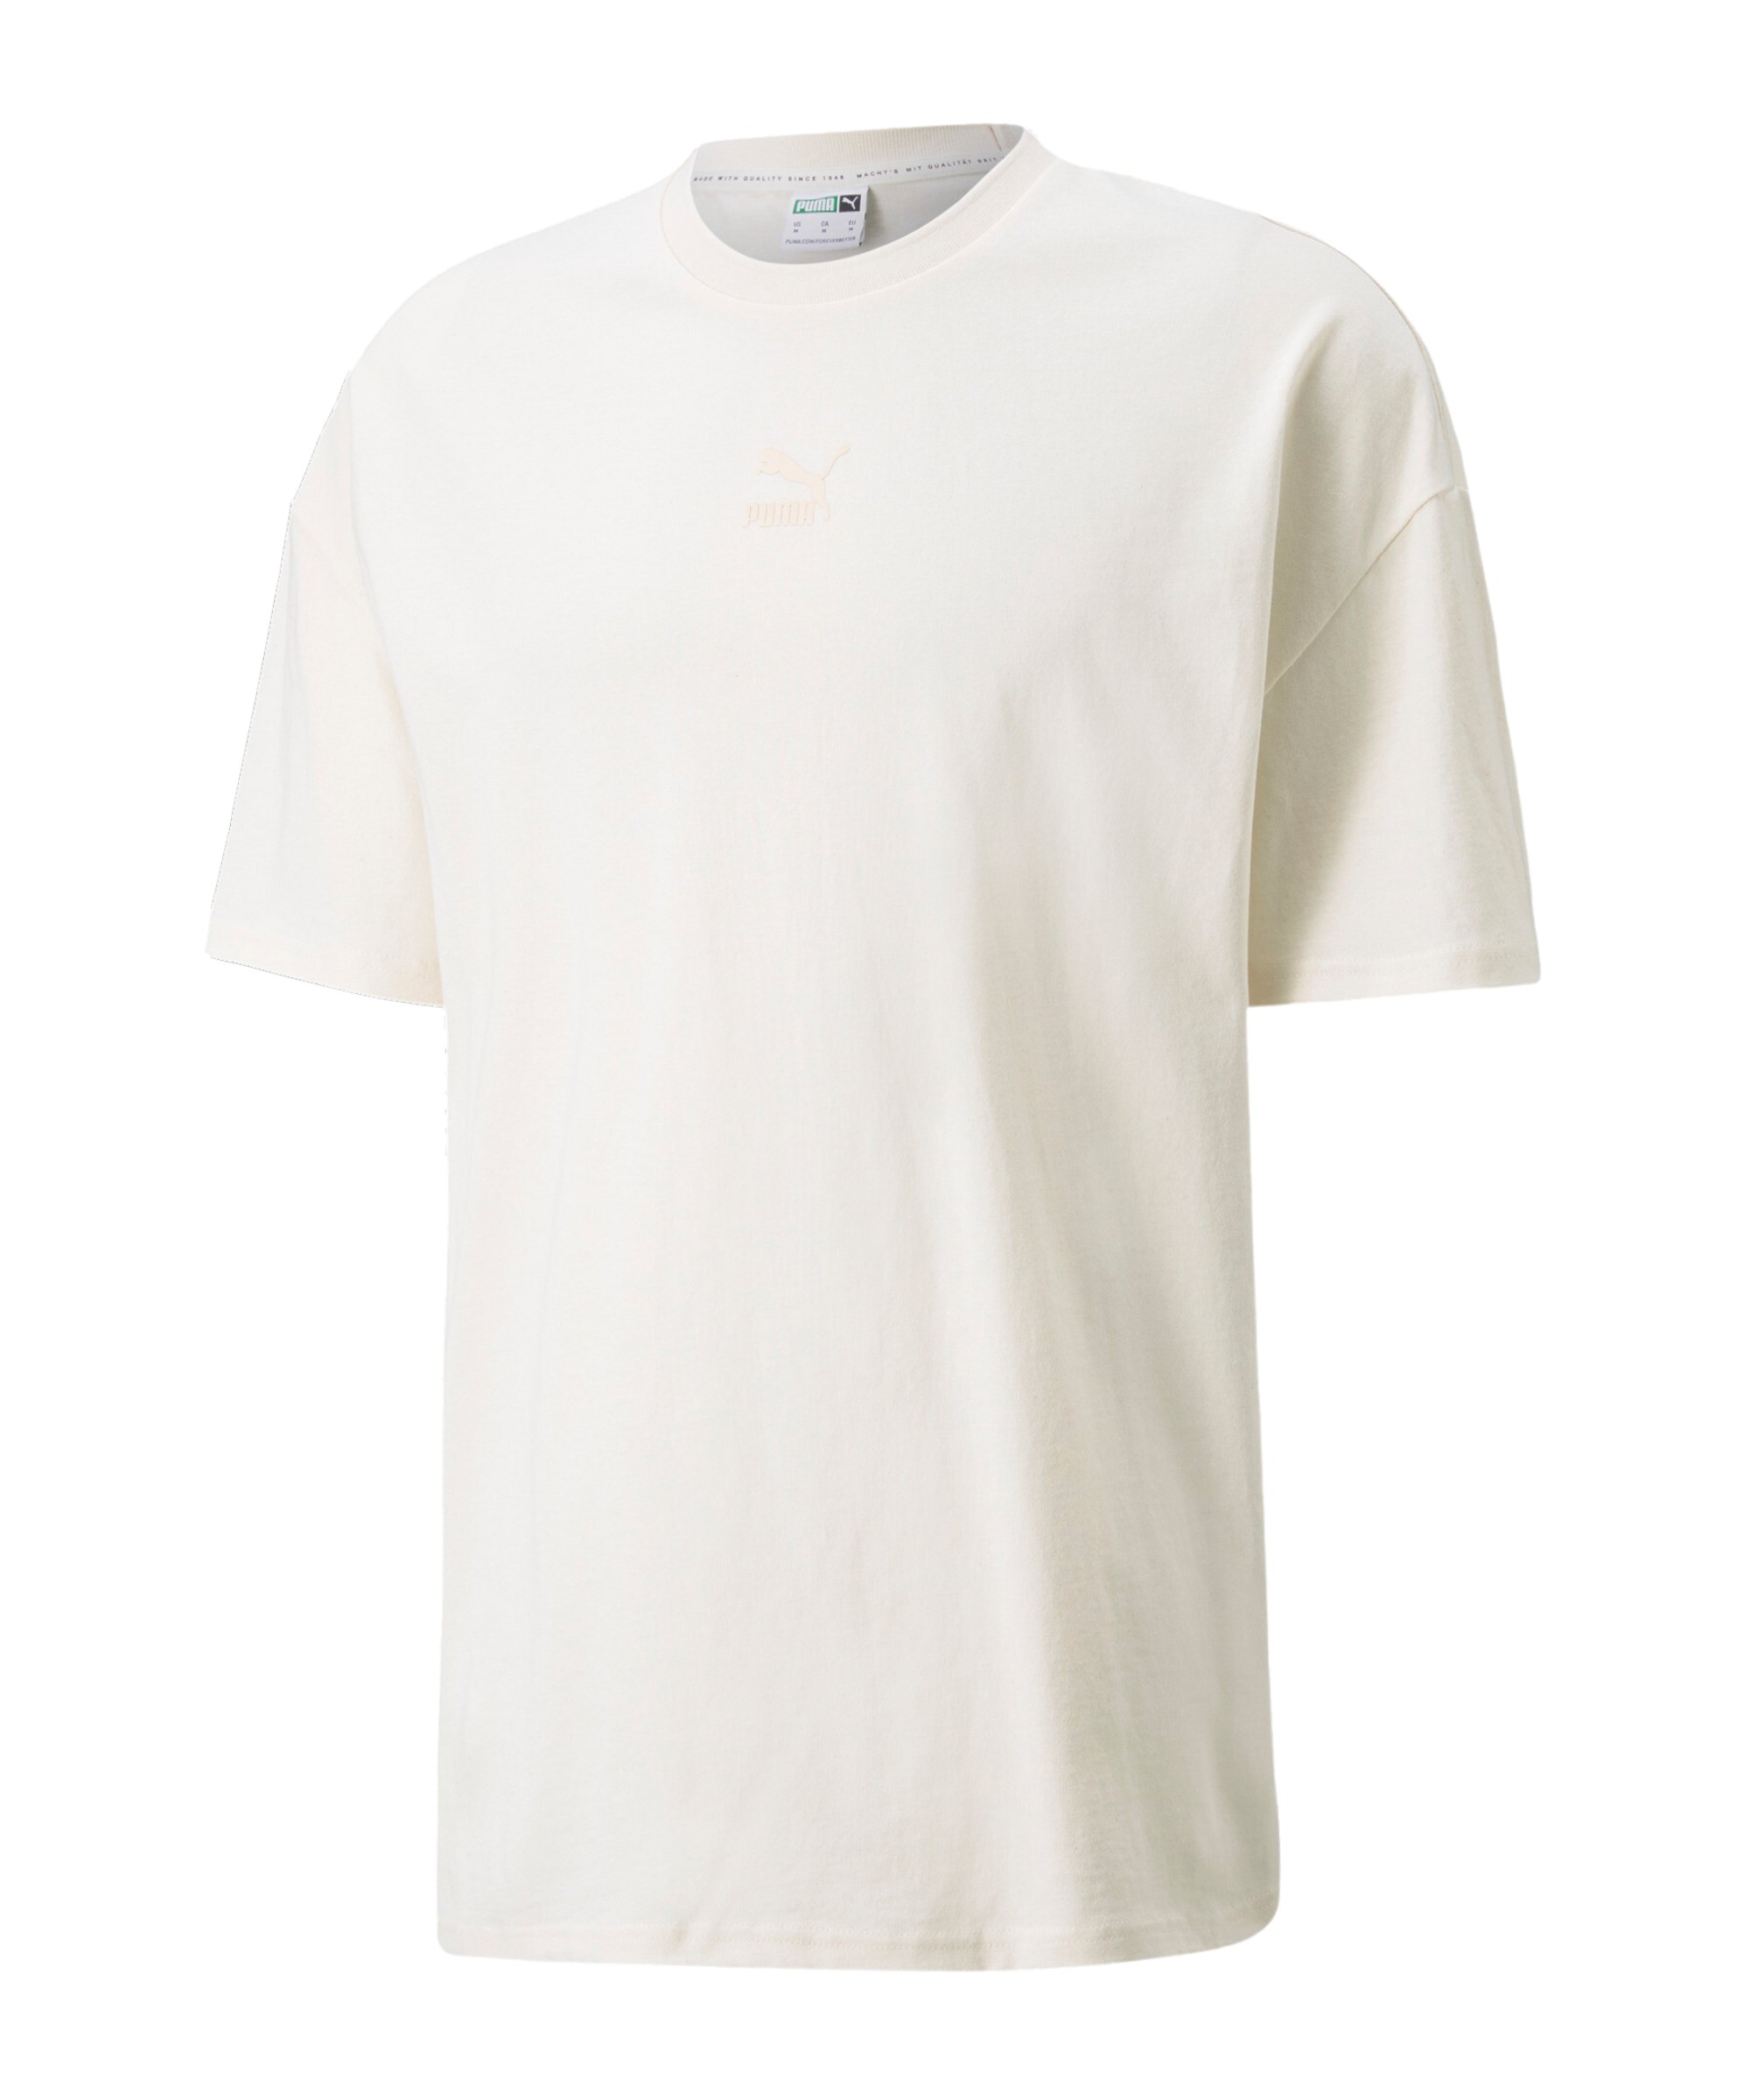 PUMA Classics Boxy T-Shirt Beige F99 - beige